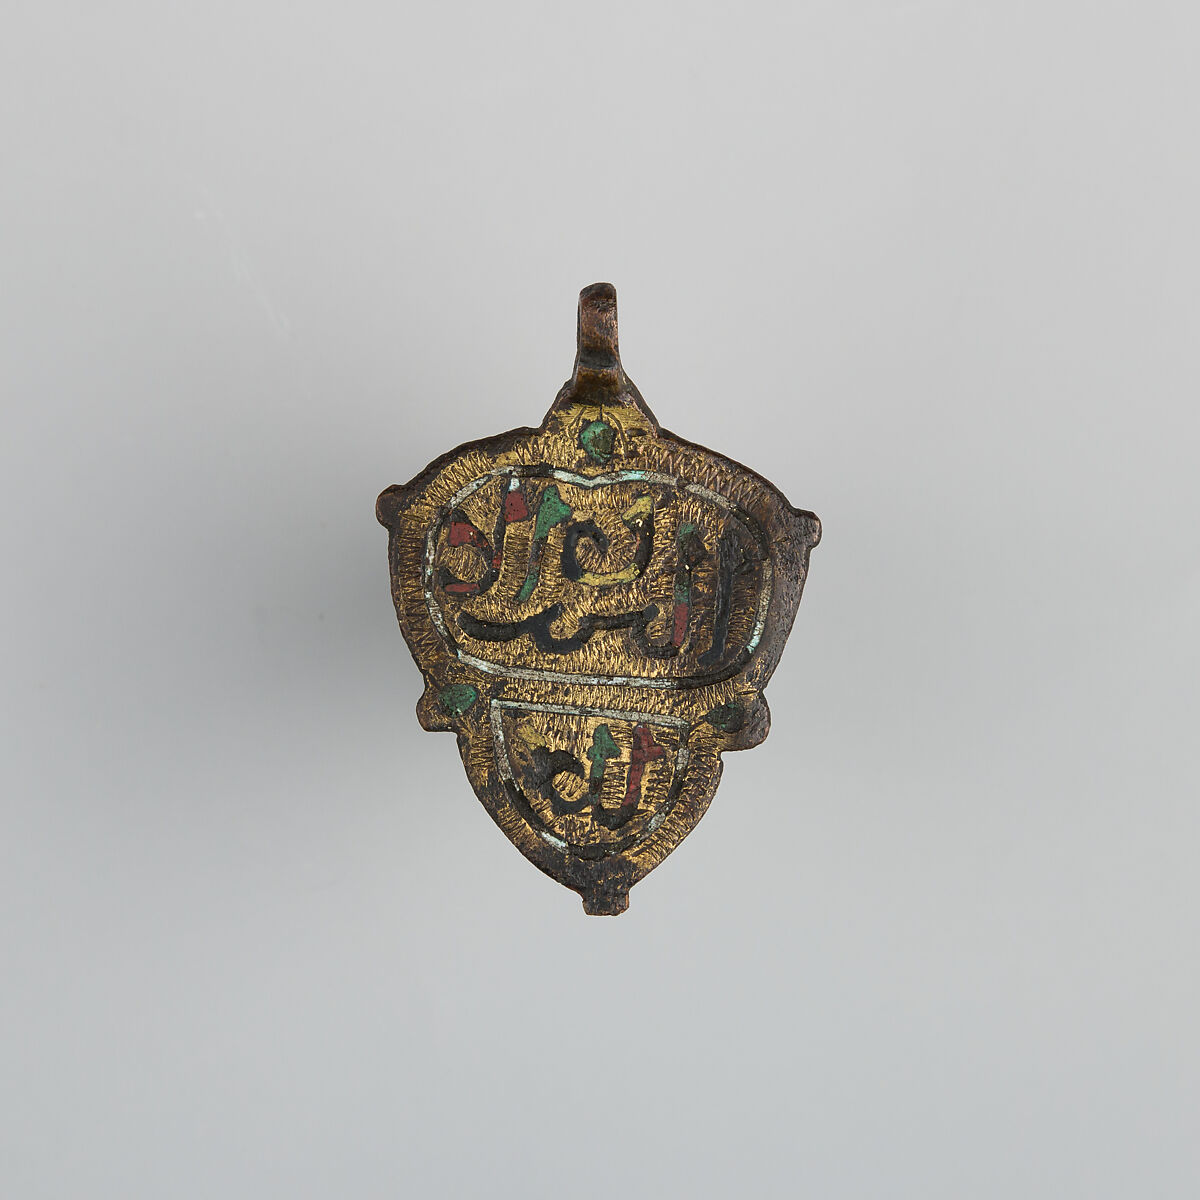 Badge or Harness Pendant, Copper, gold, enamel, Spanish or Moorish